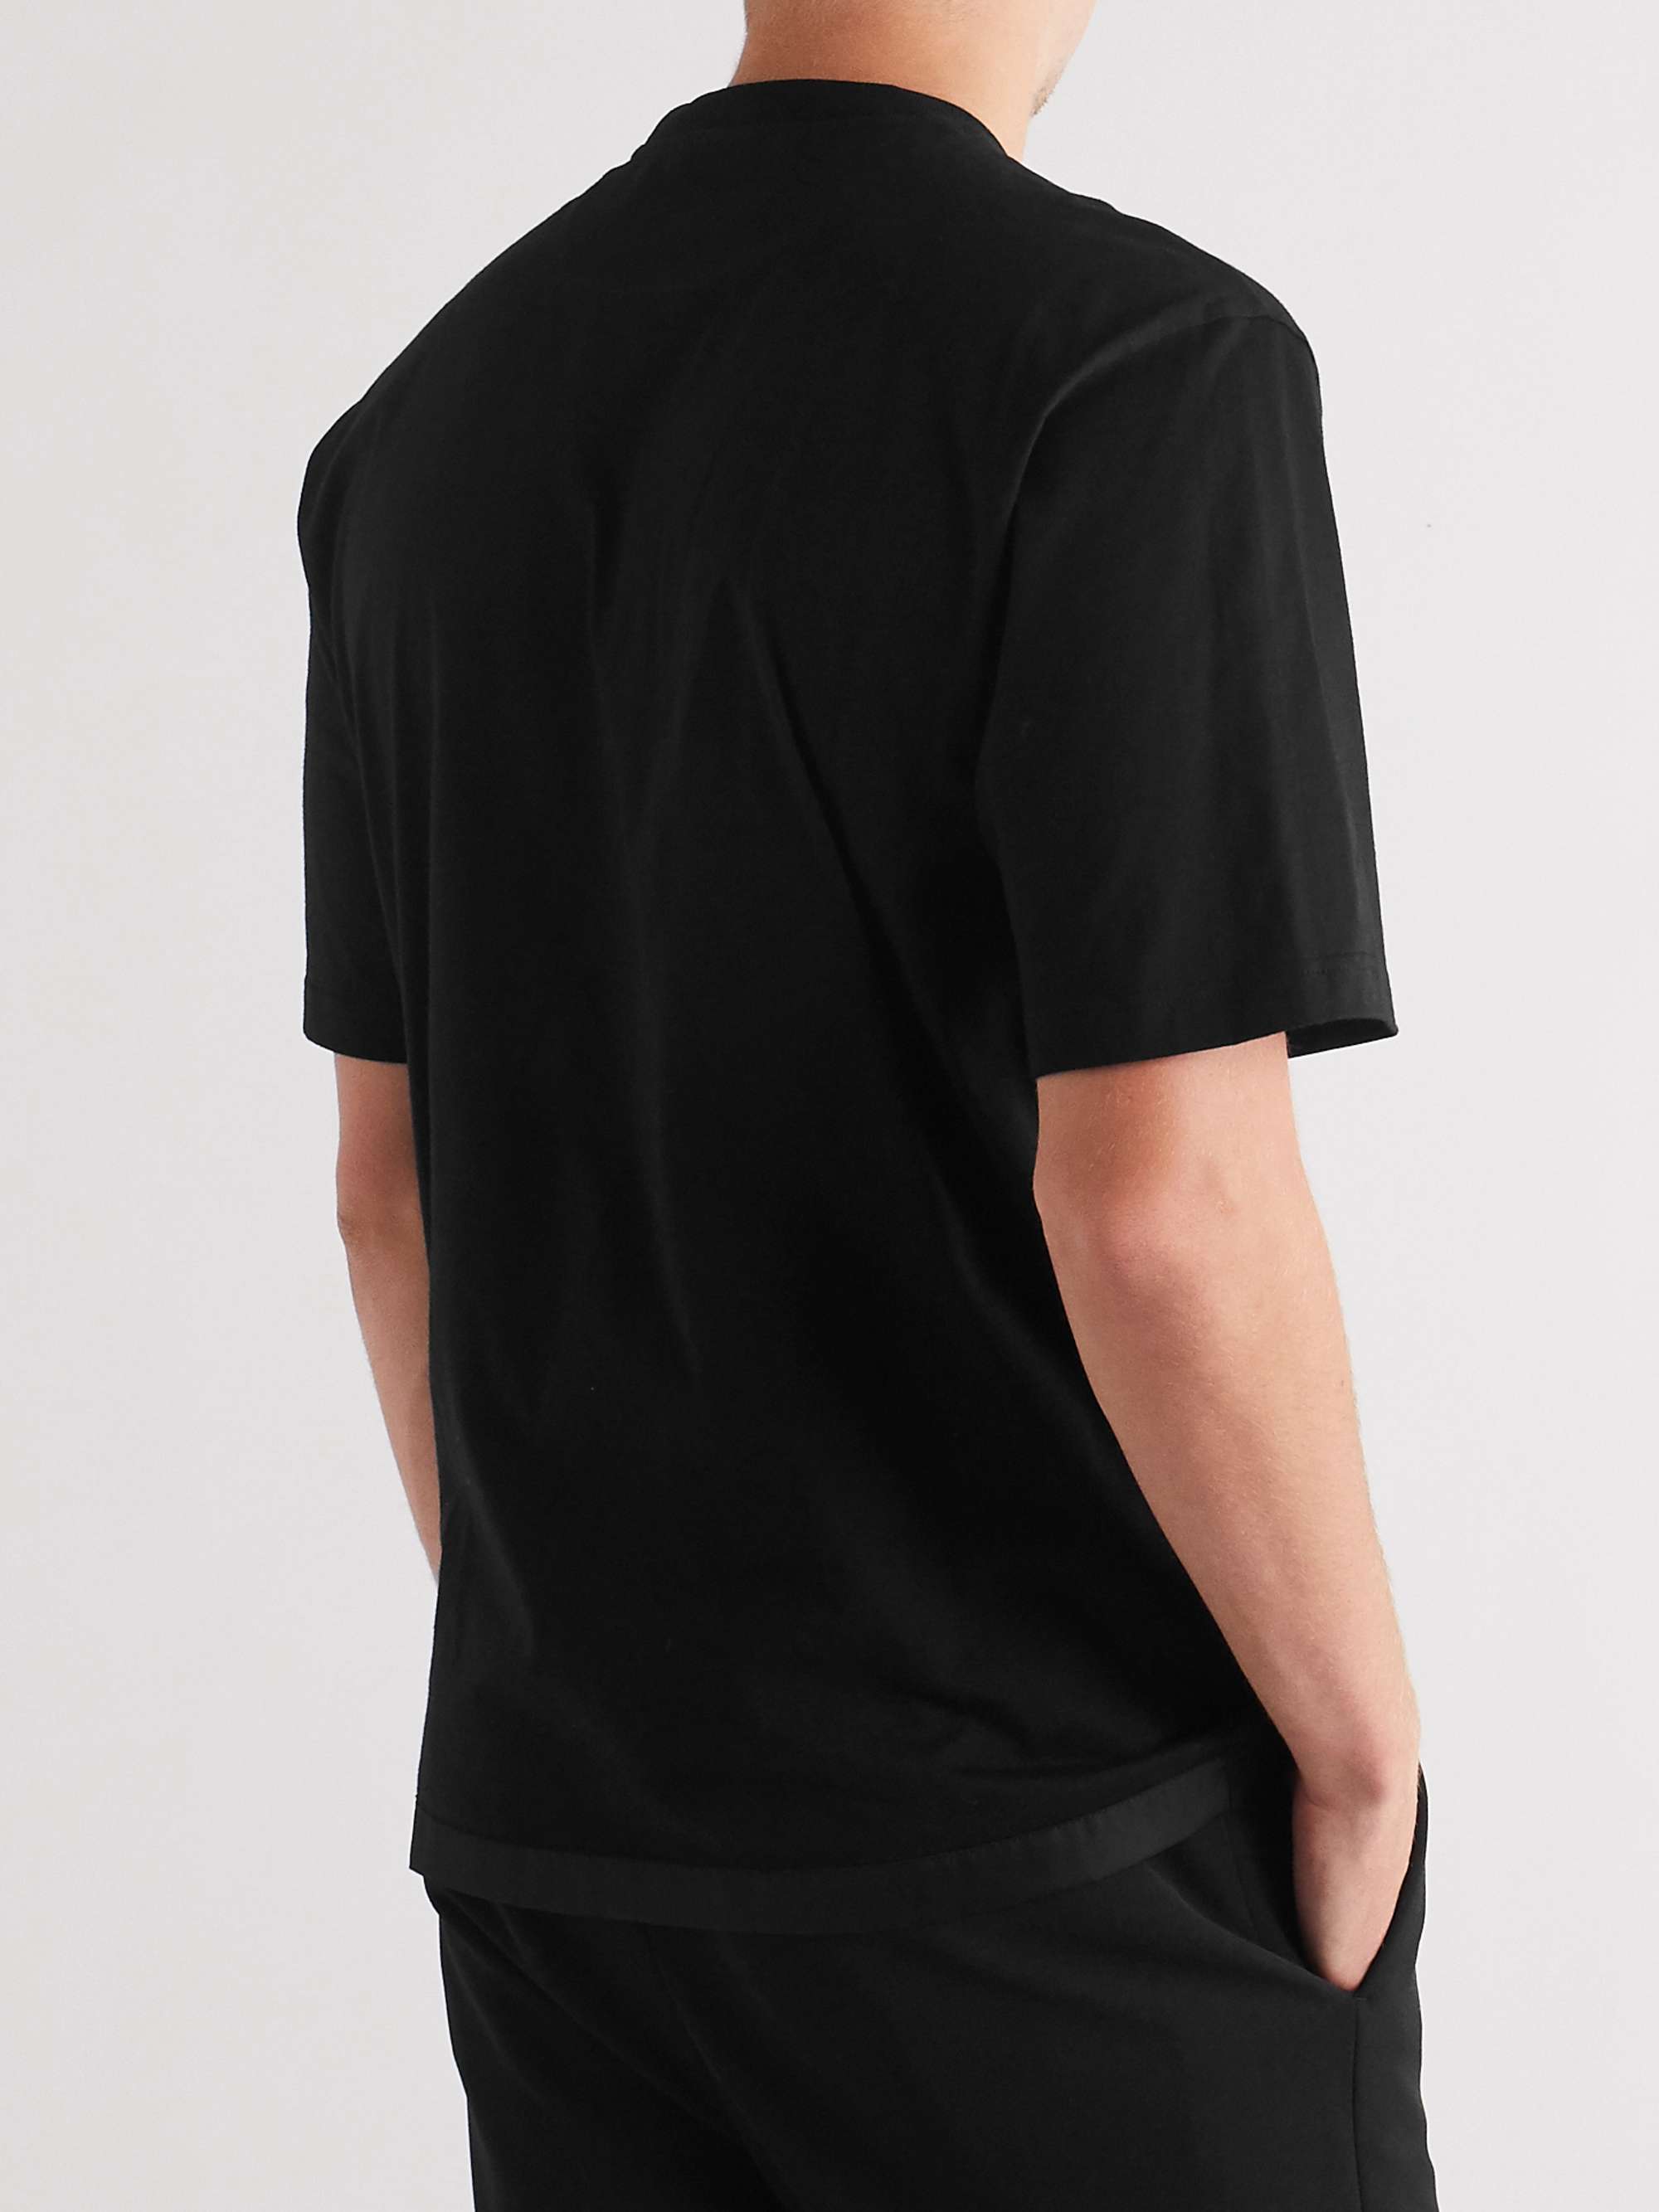 PRADA Logo-Appliquéd Leather- and Nylon-Trimmed Cotton-Jersey T-Shirt ...